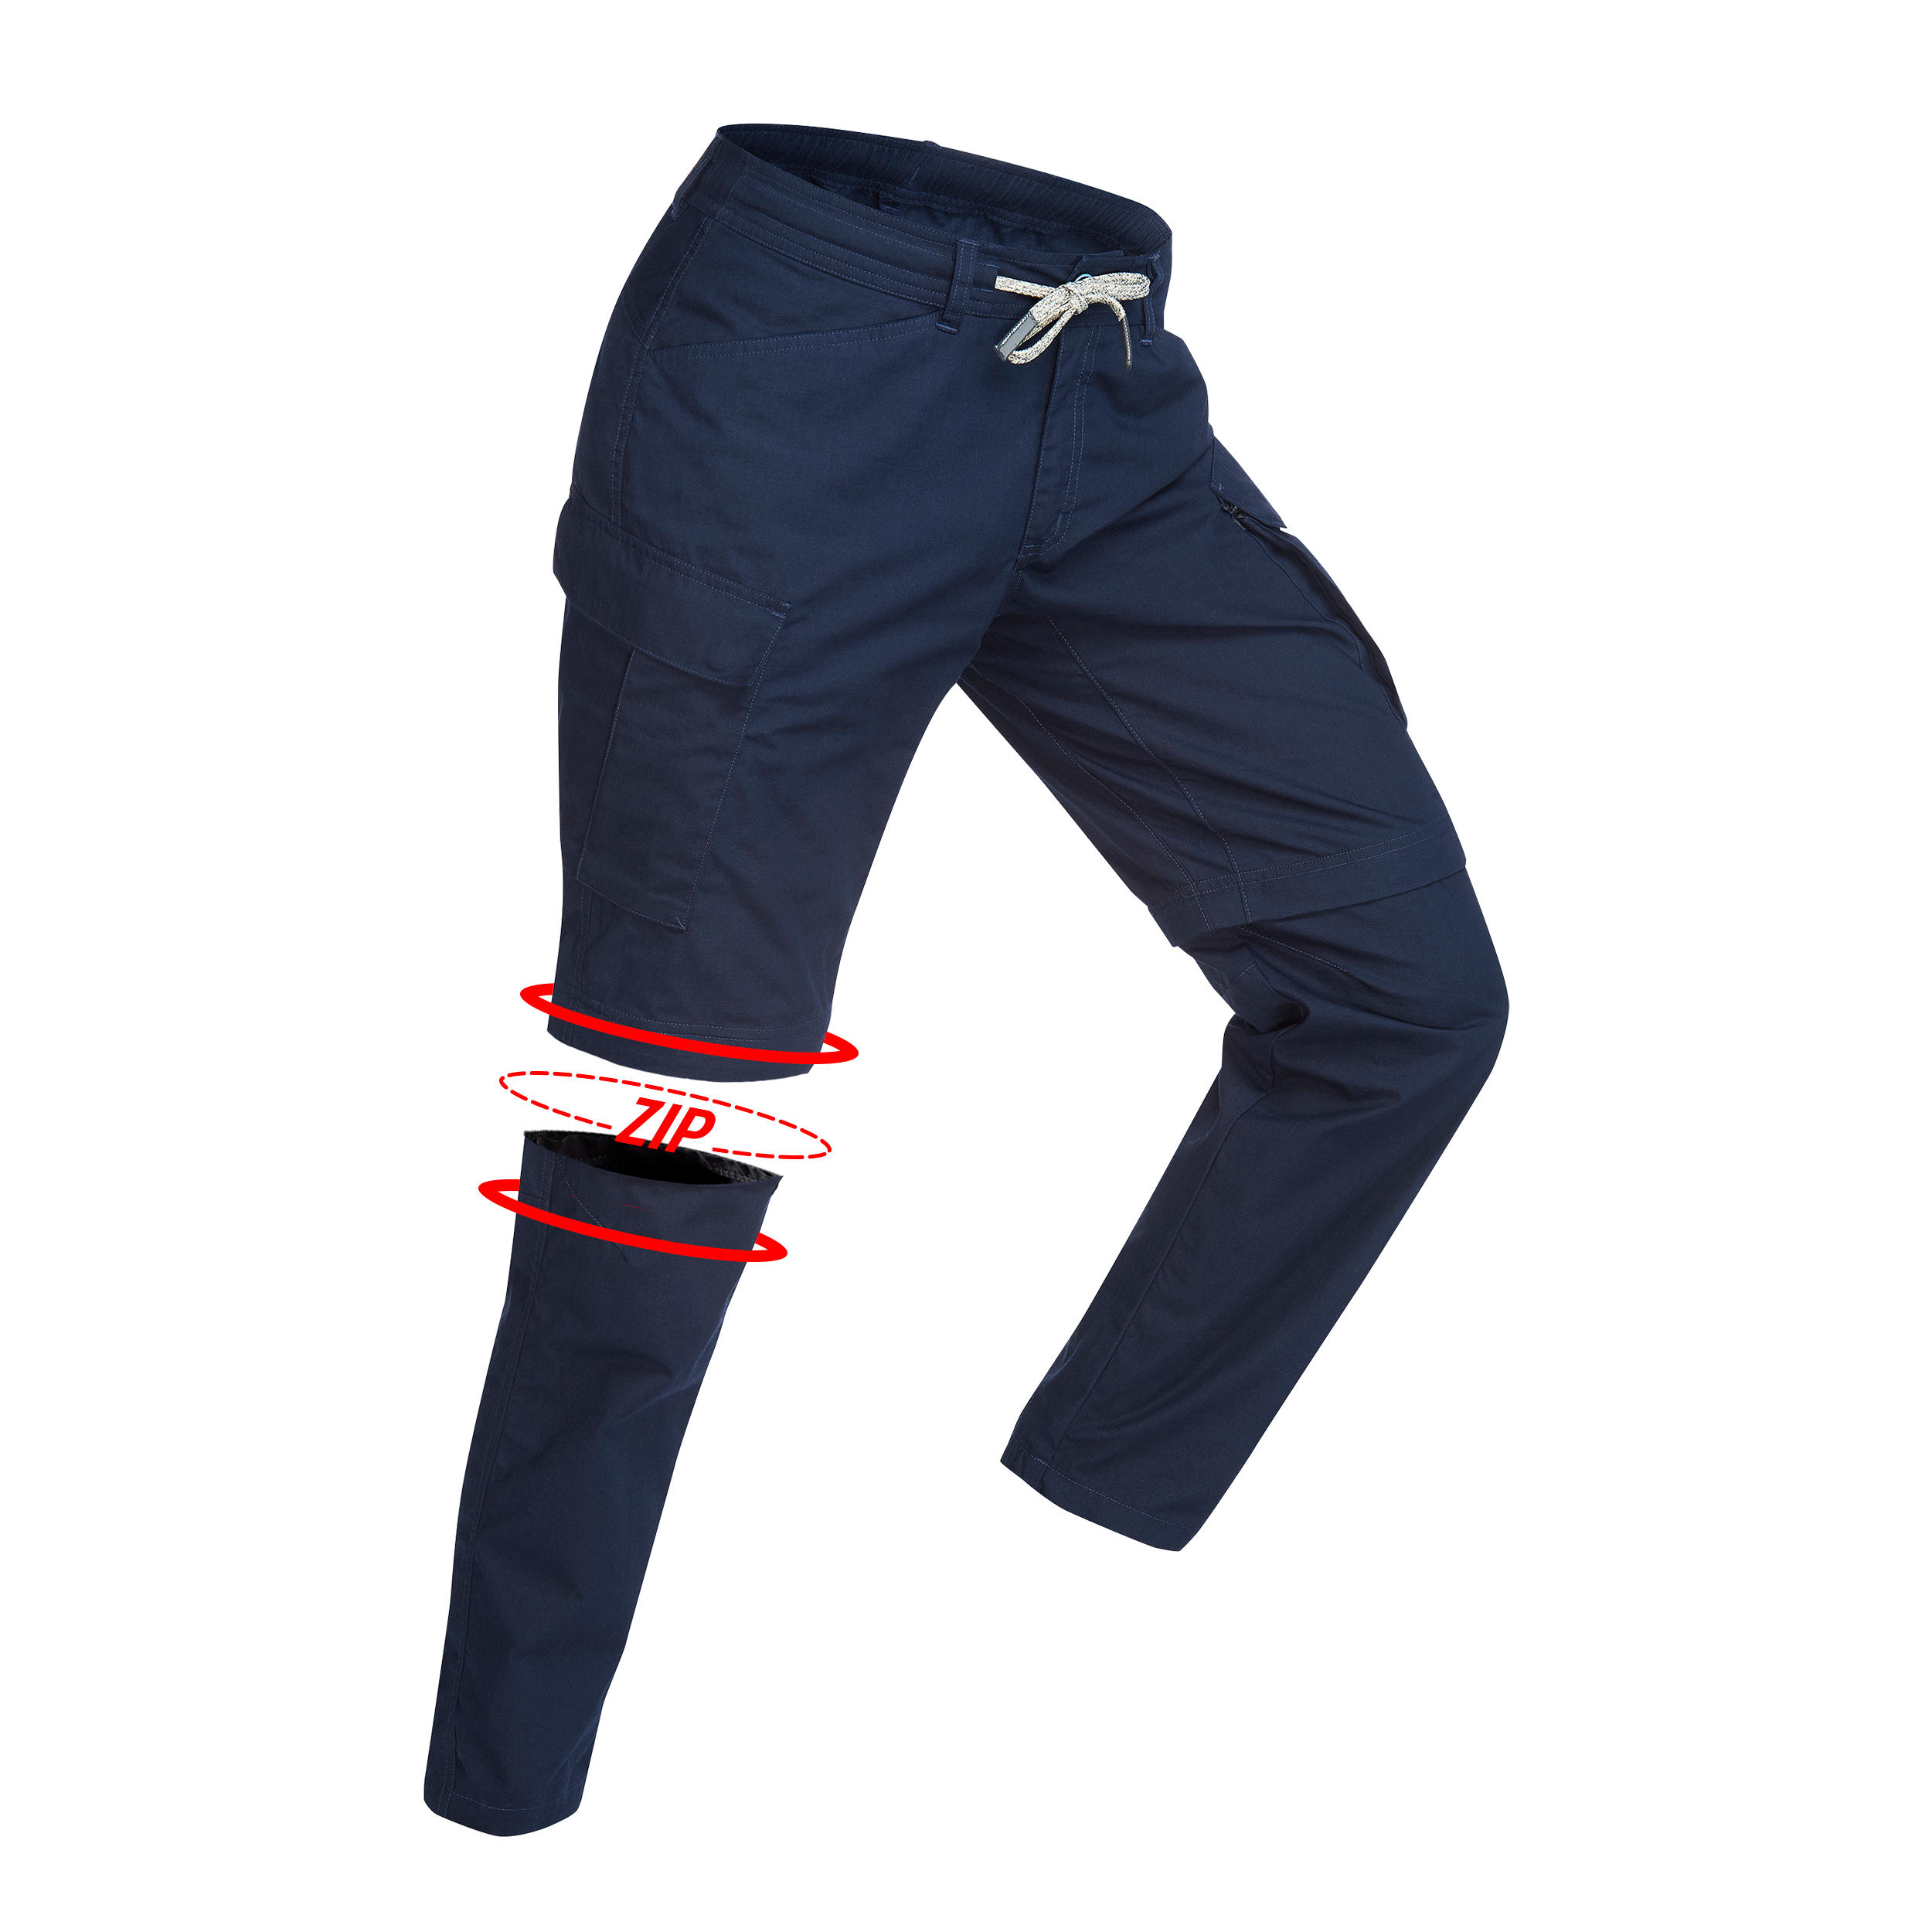 Decathlon Men's Cargo Pant | Men's Breathable Trousers Pants SG-500 Khaki |  Should i Buy - YouTube